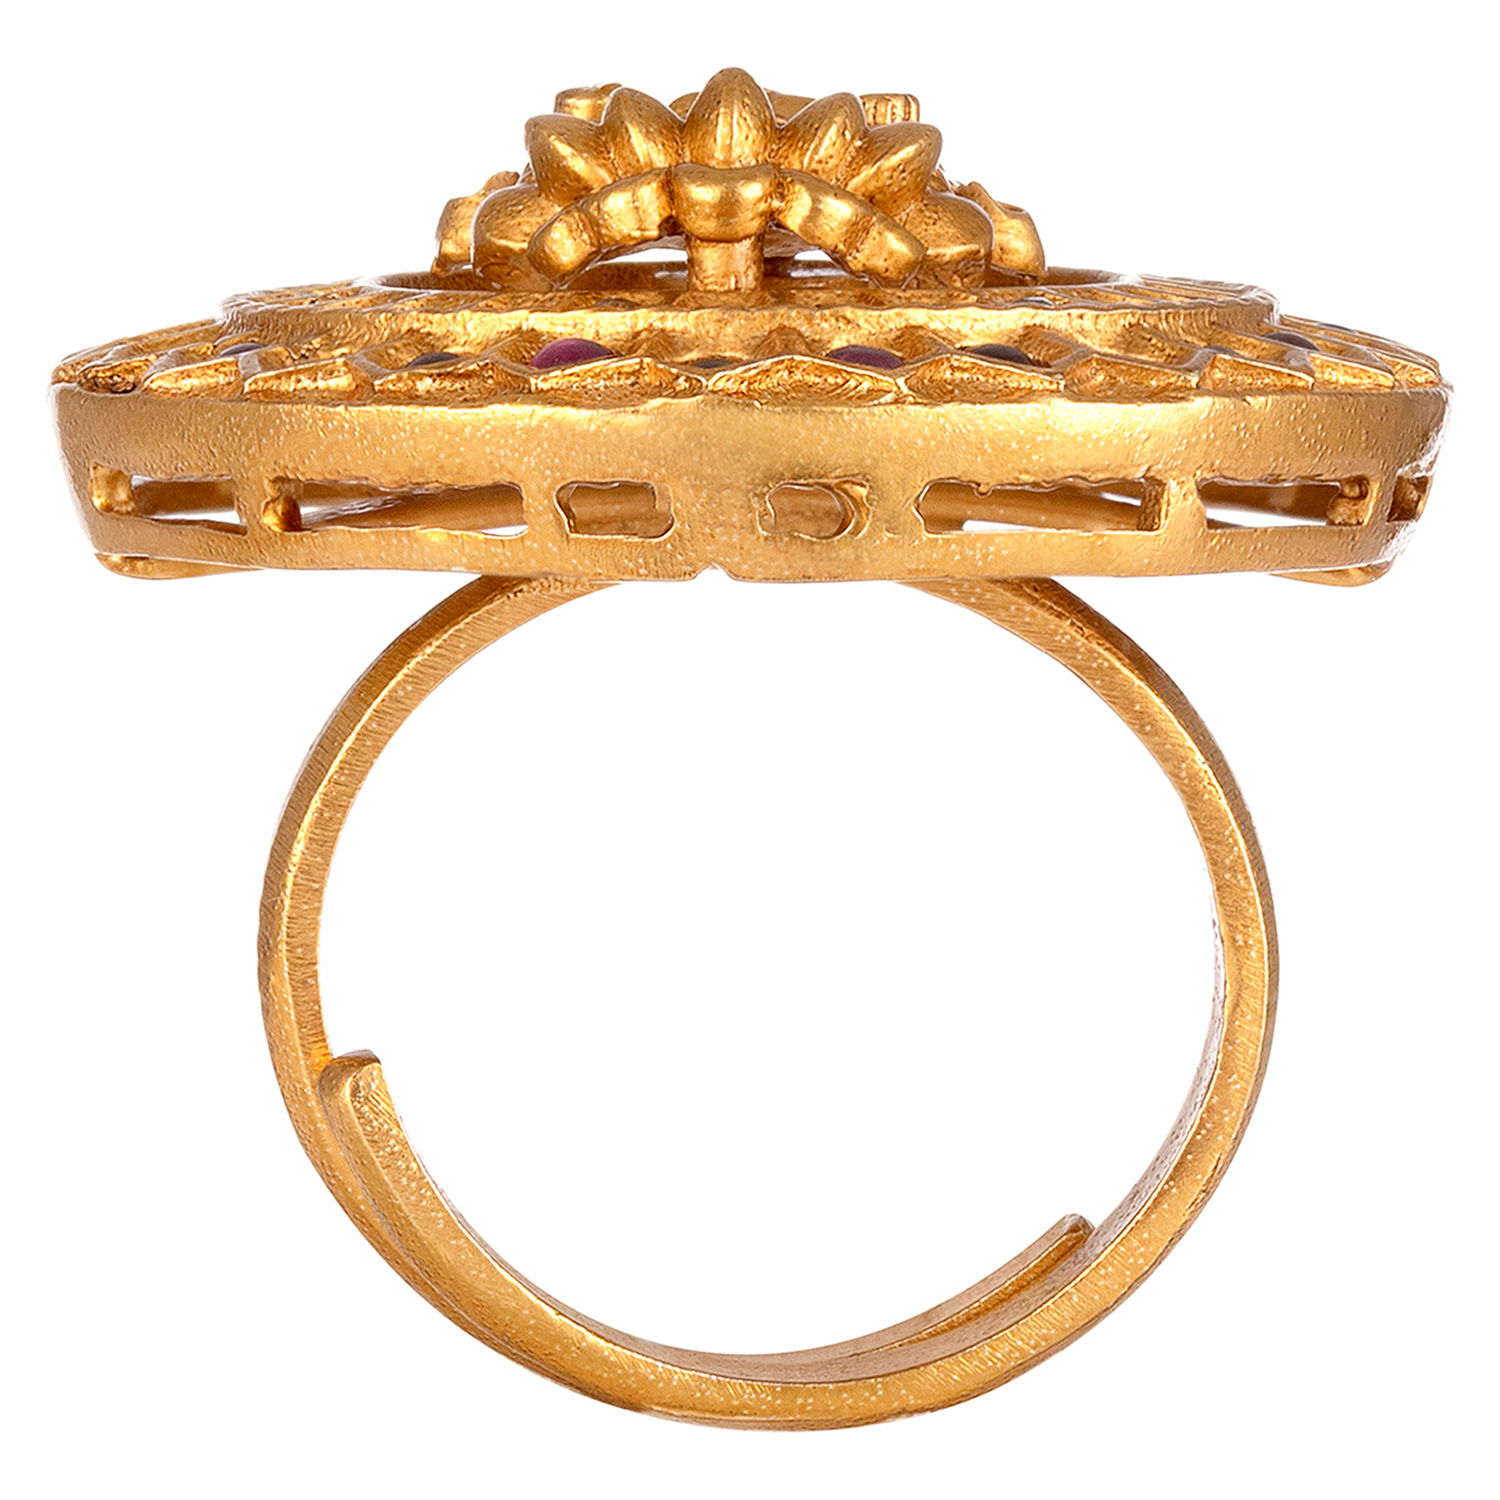 22K Gold 'Lakshmi' Ring For Women with Cz - 235-GR5977 in 4.400 Grams